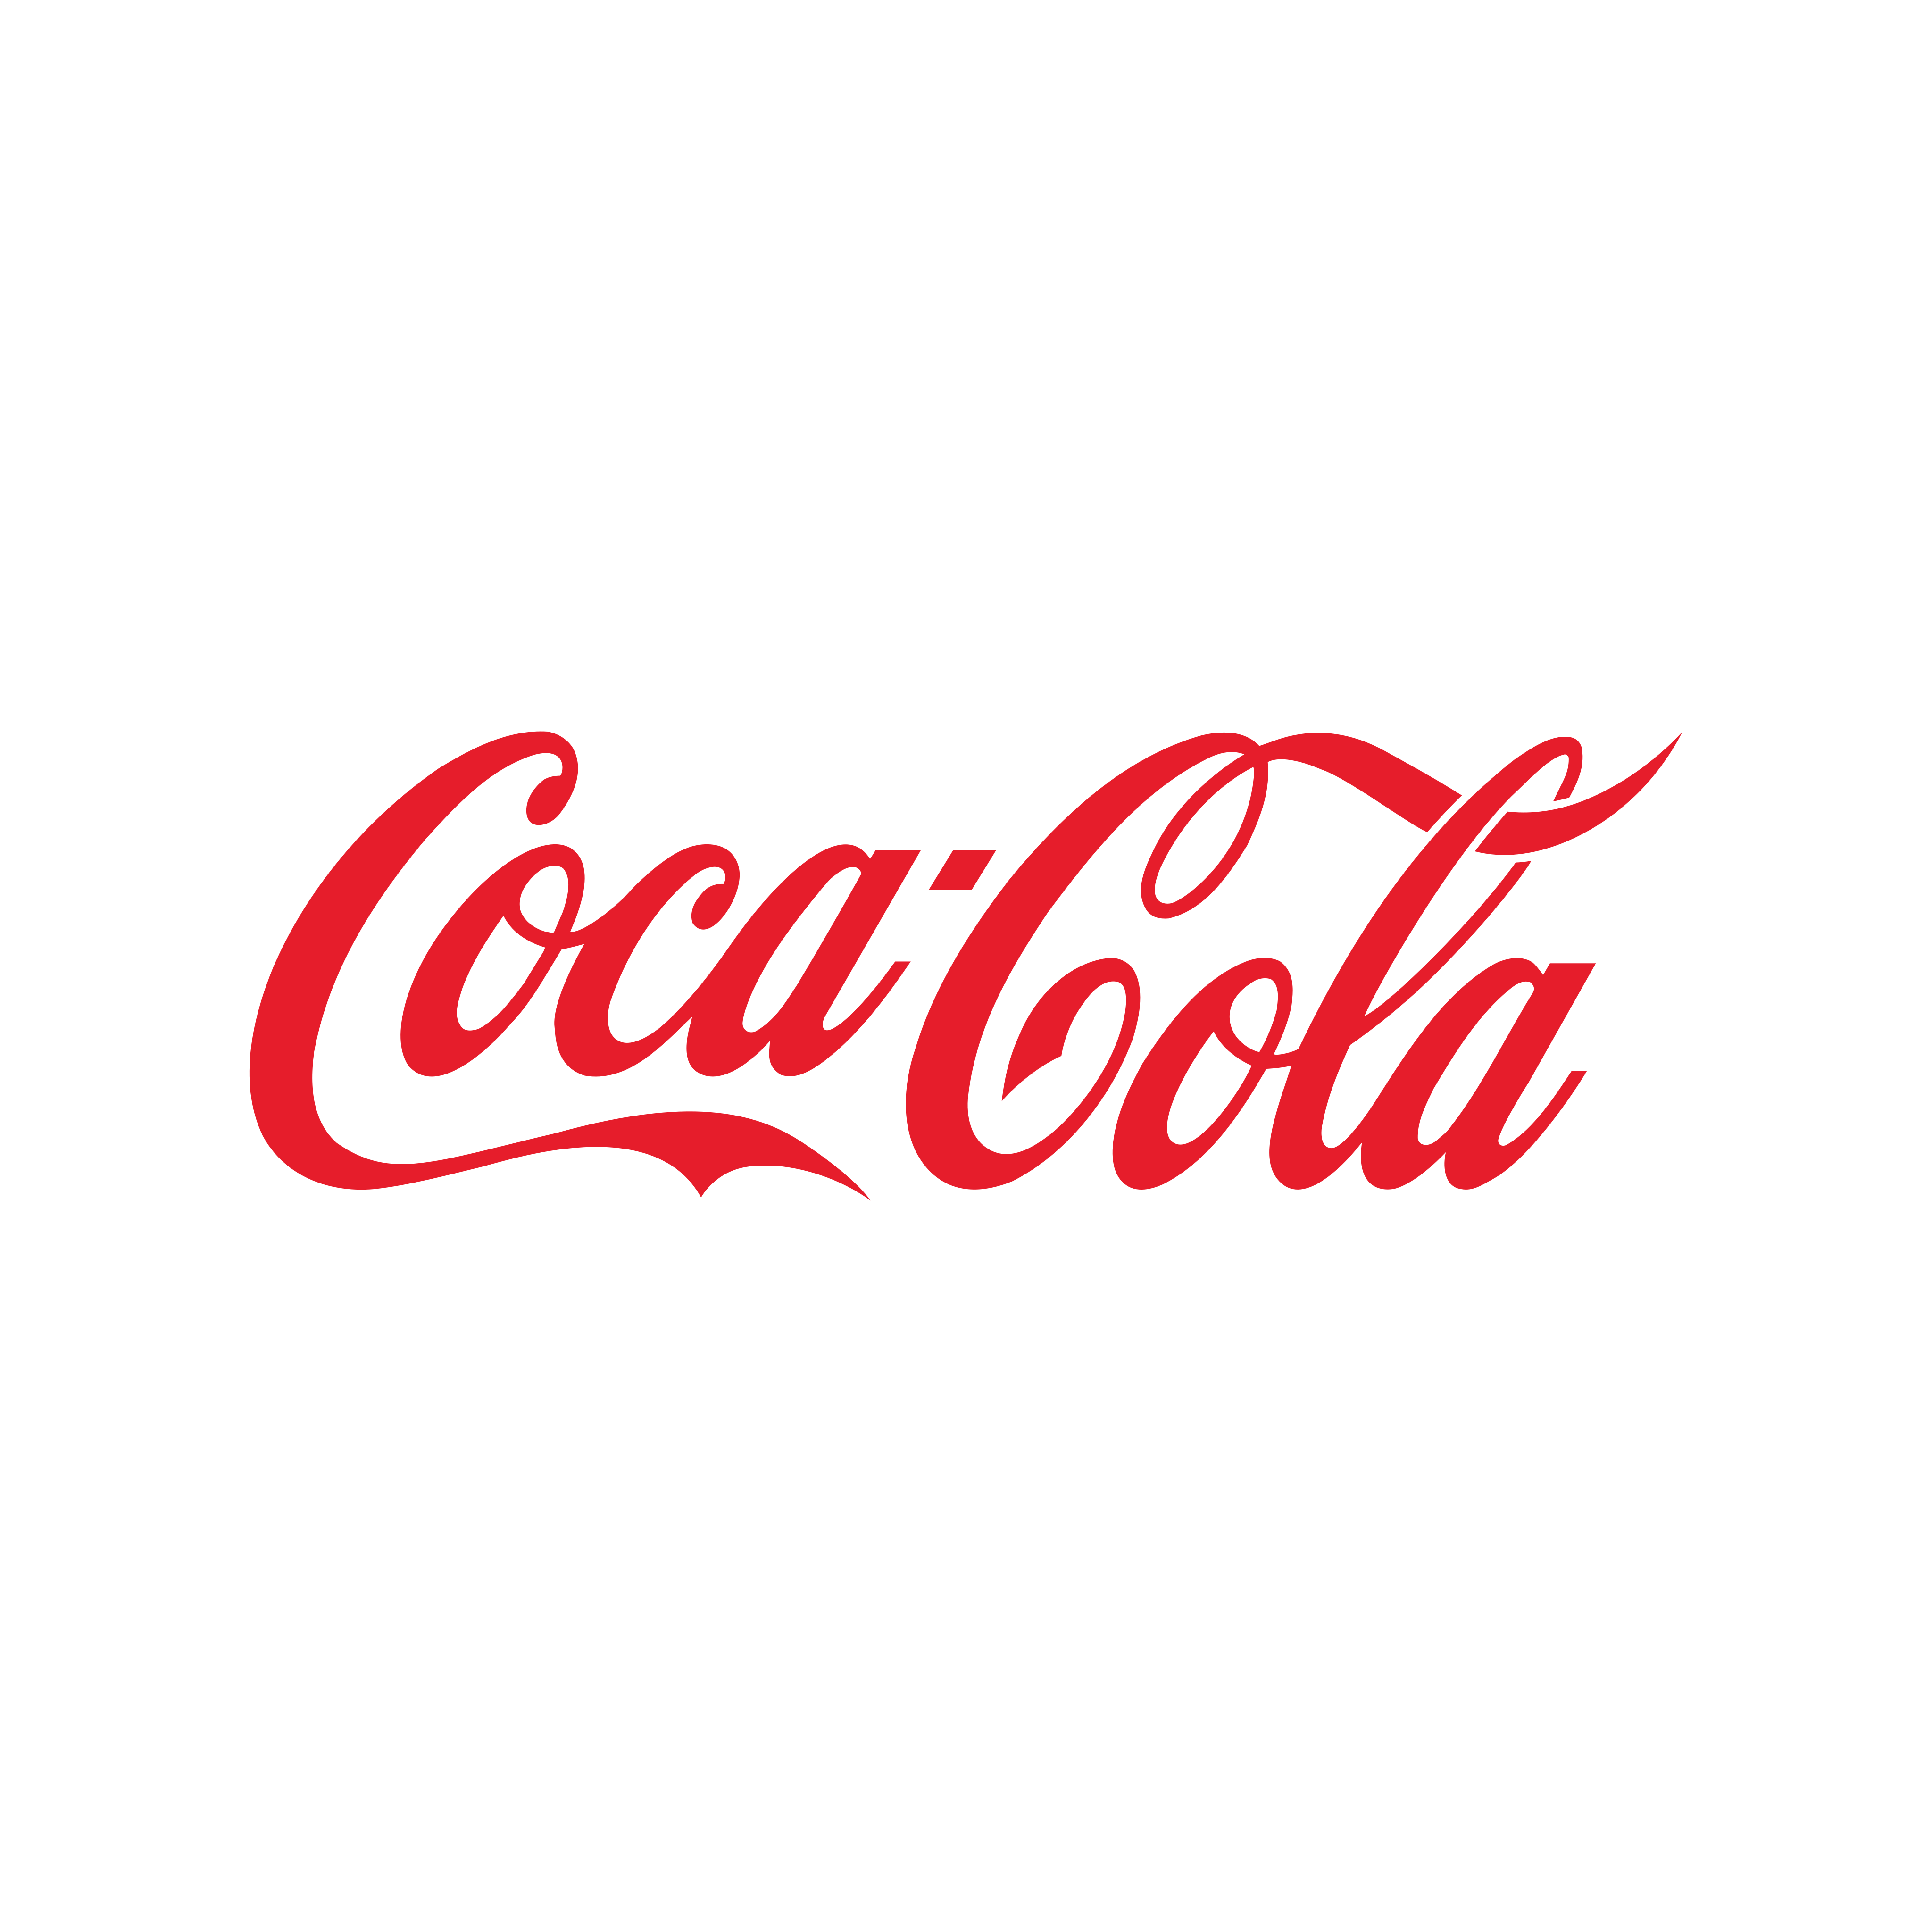 Coca-cola-logo-png - Family G